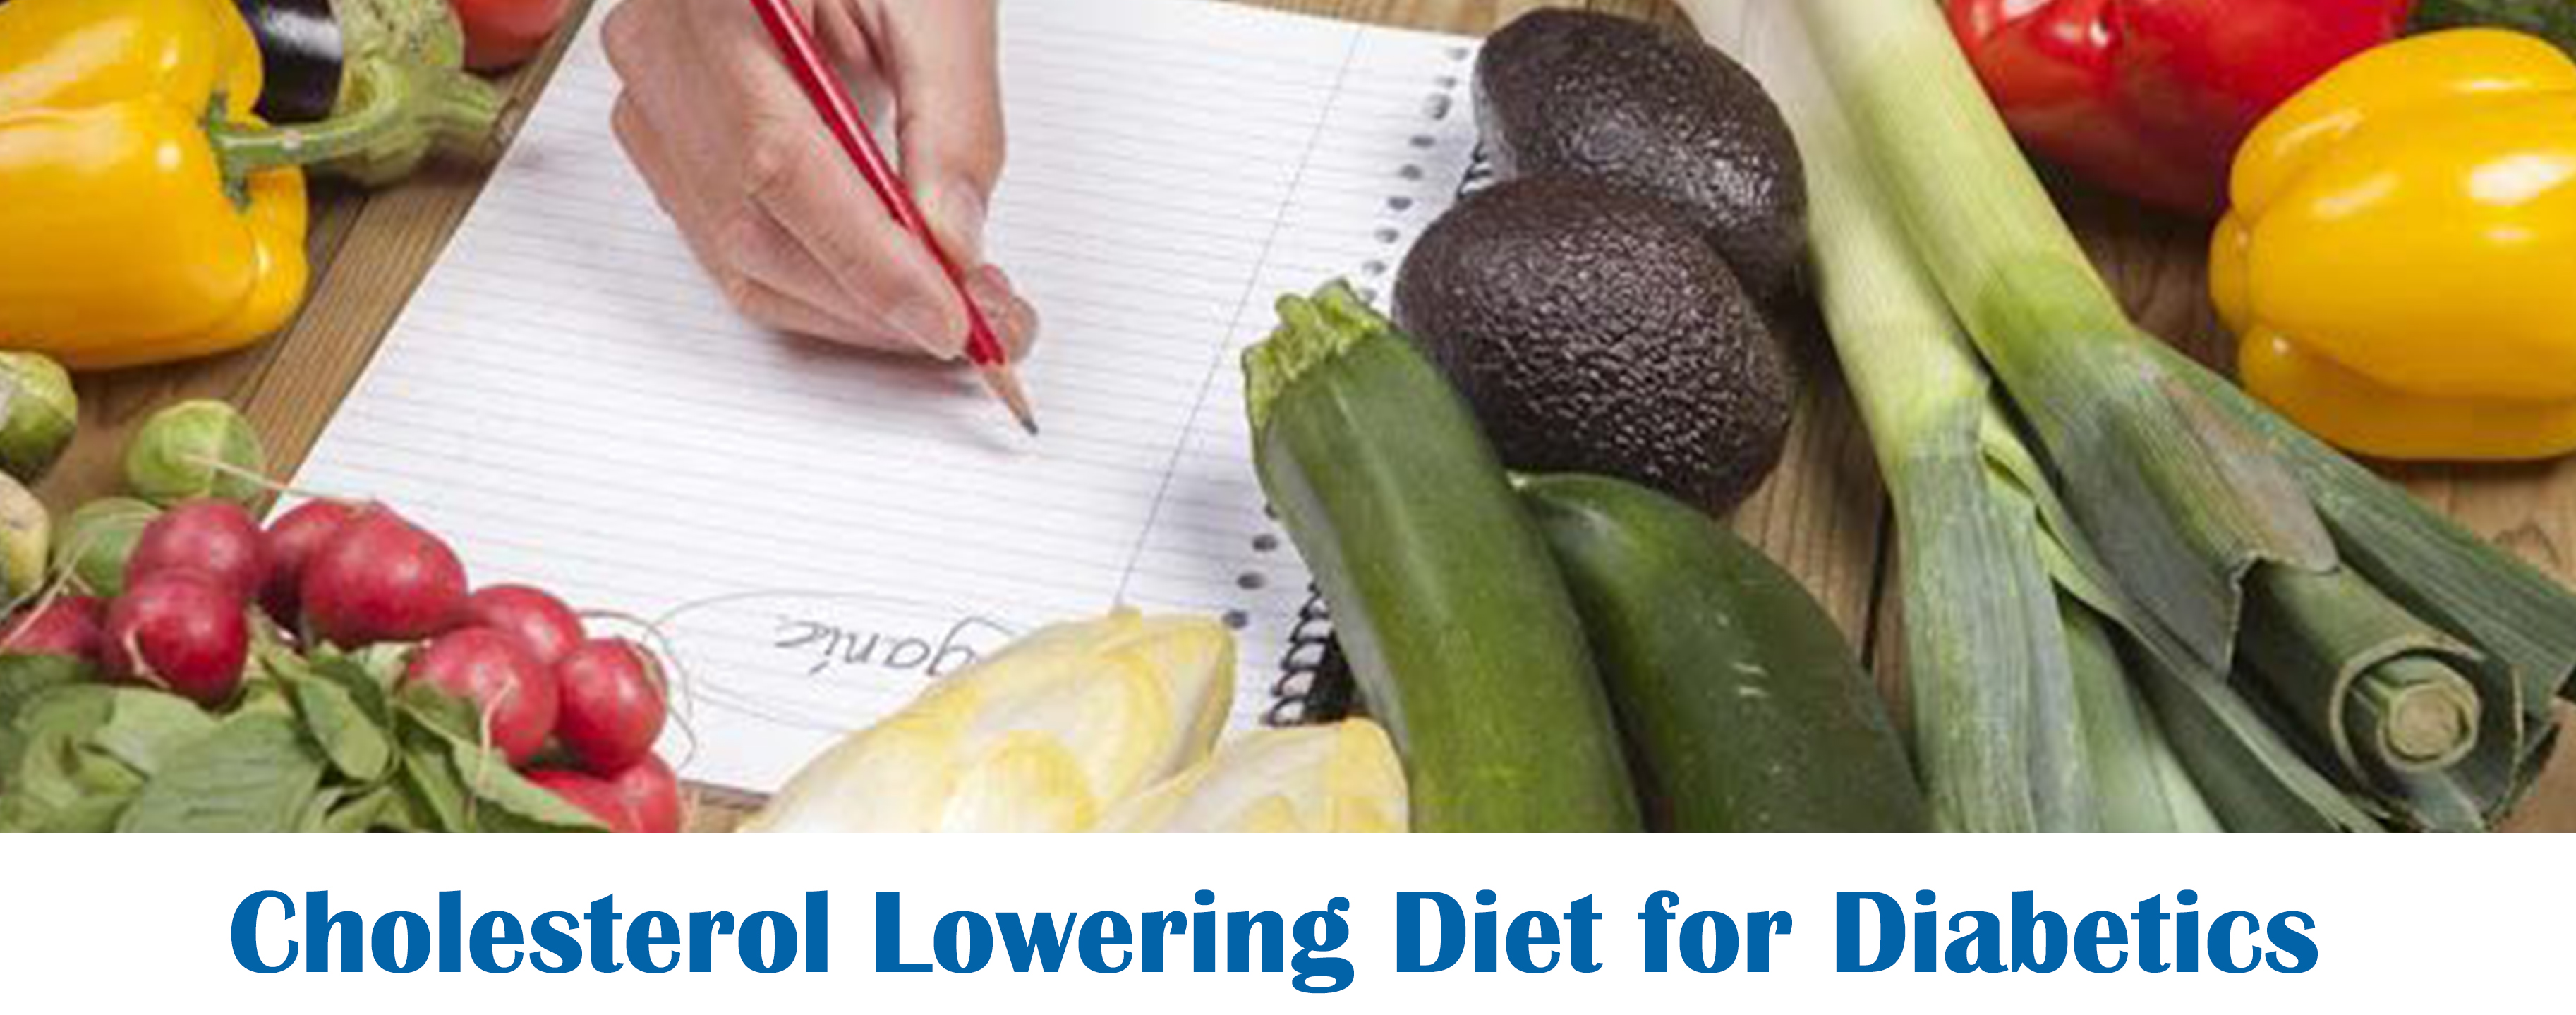 Cholesterol lowering diet for people with Diabetes